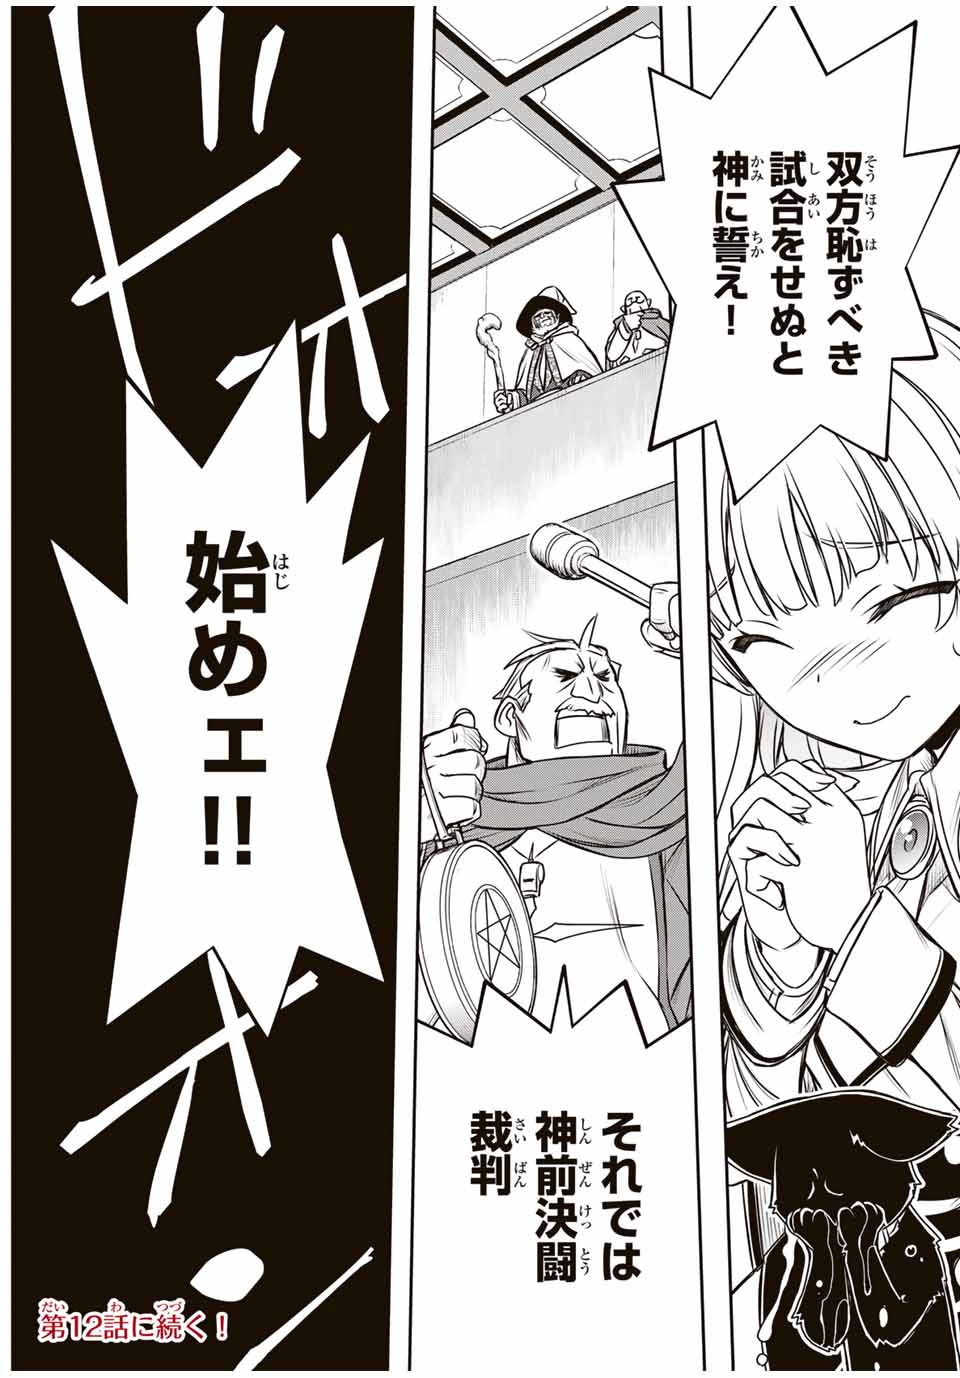 Nengan no Akuyaku Reijou (Last Boss) no Karada wo Teniiretazo!  - Chapter 11 - Page 19